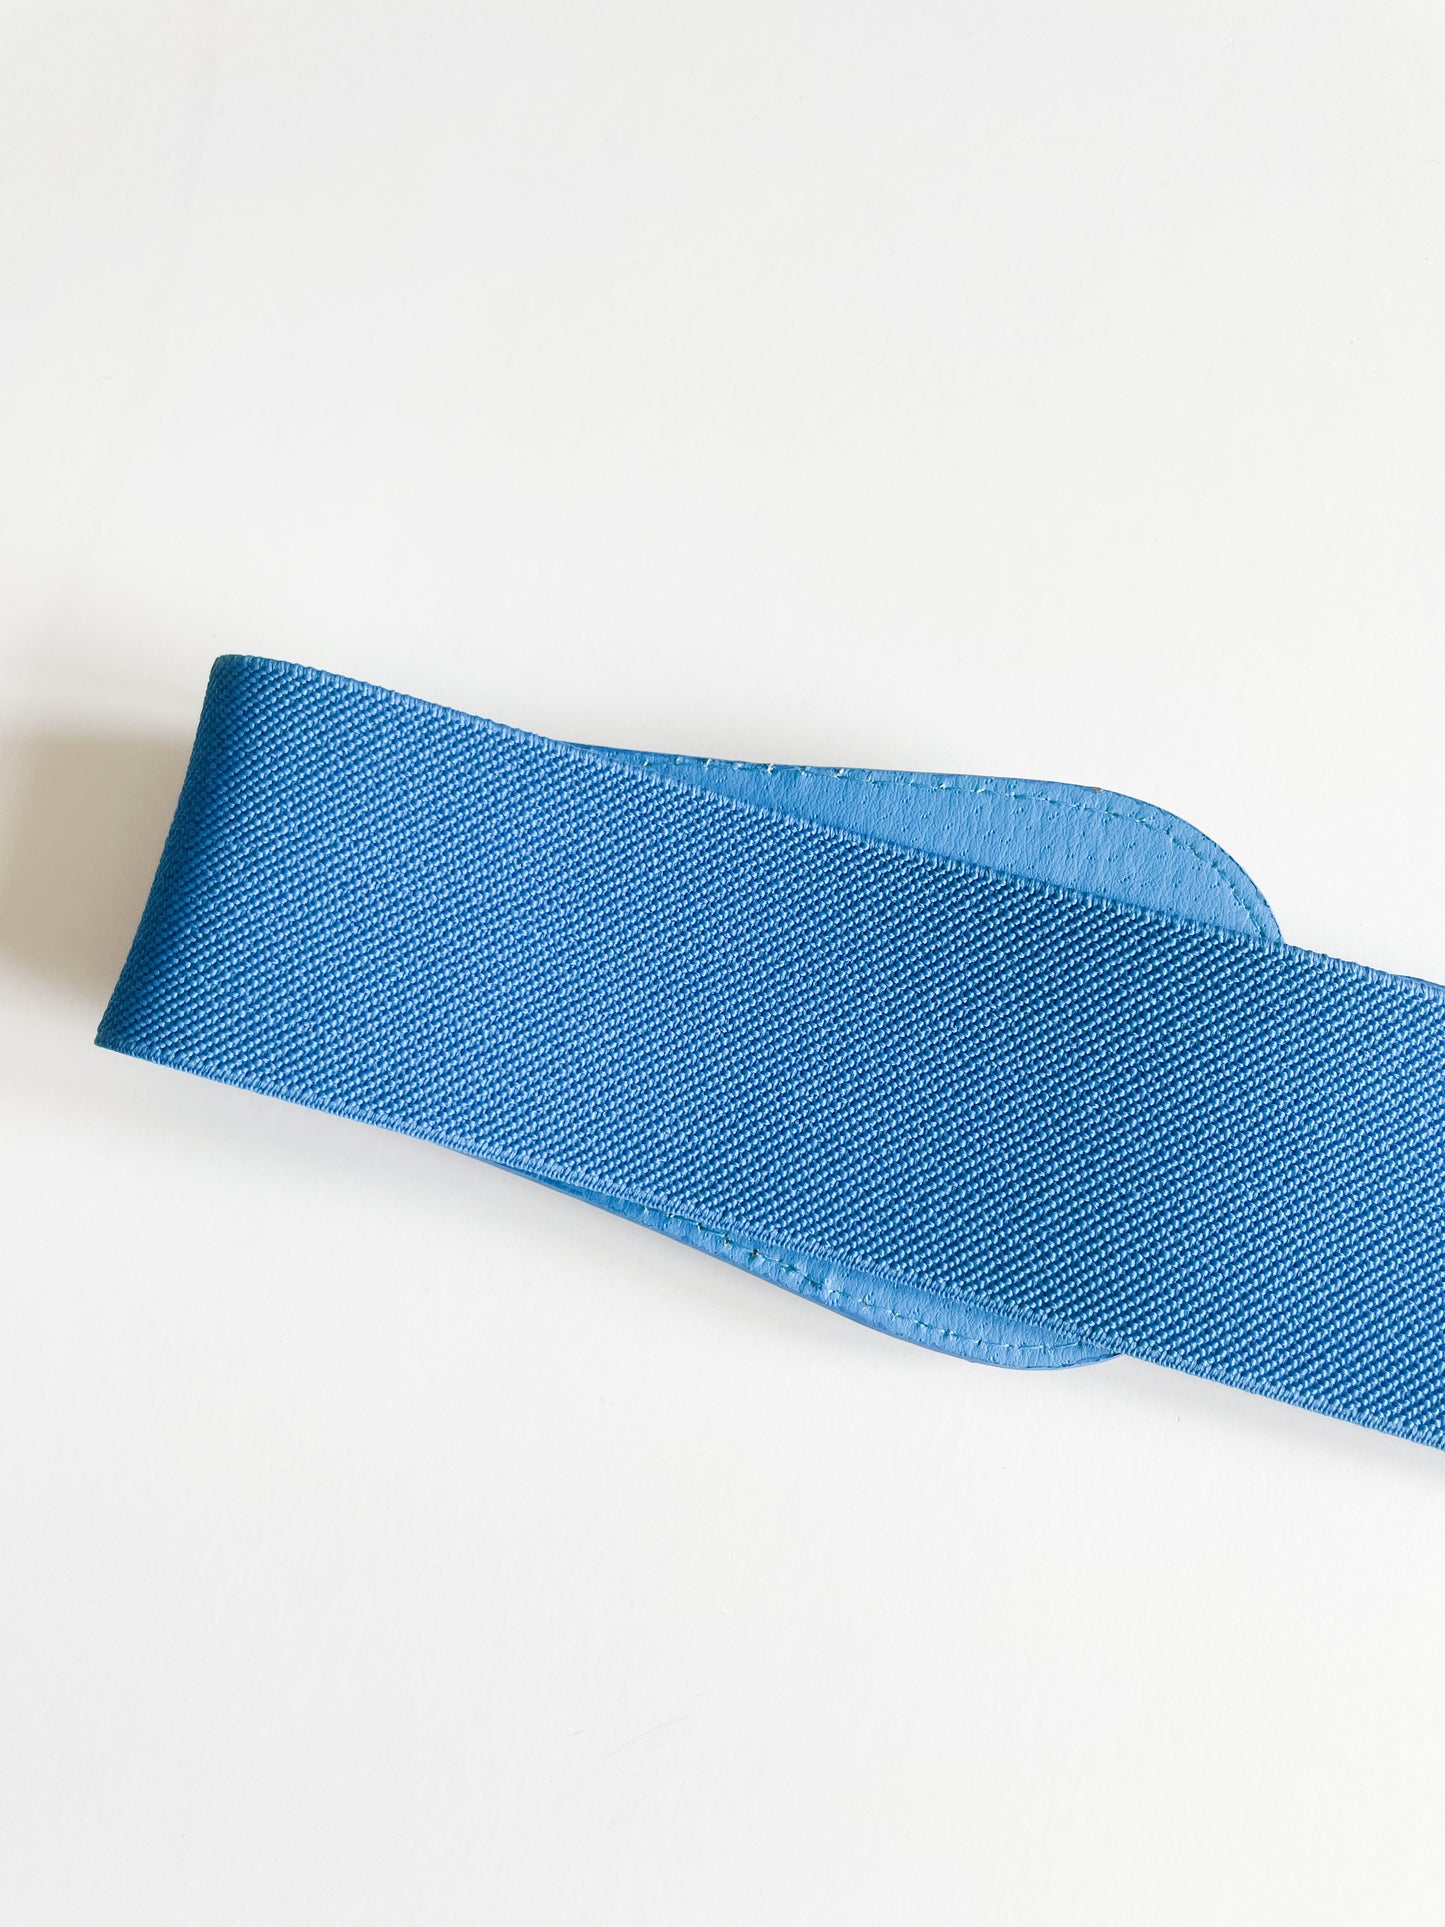 Blue and Gold Chain Stretch Waist Belt - M/L